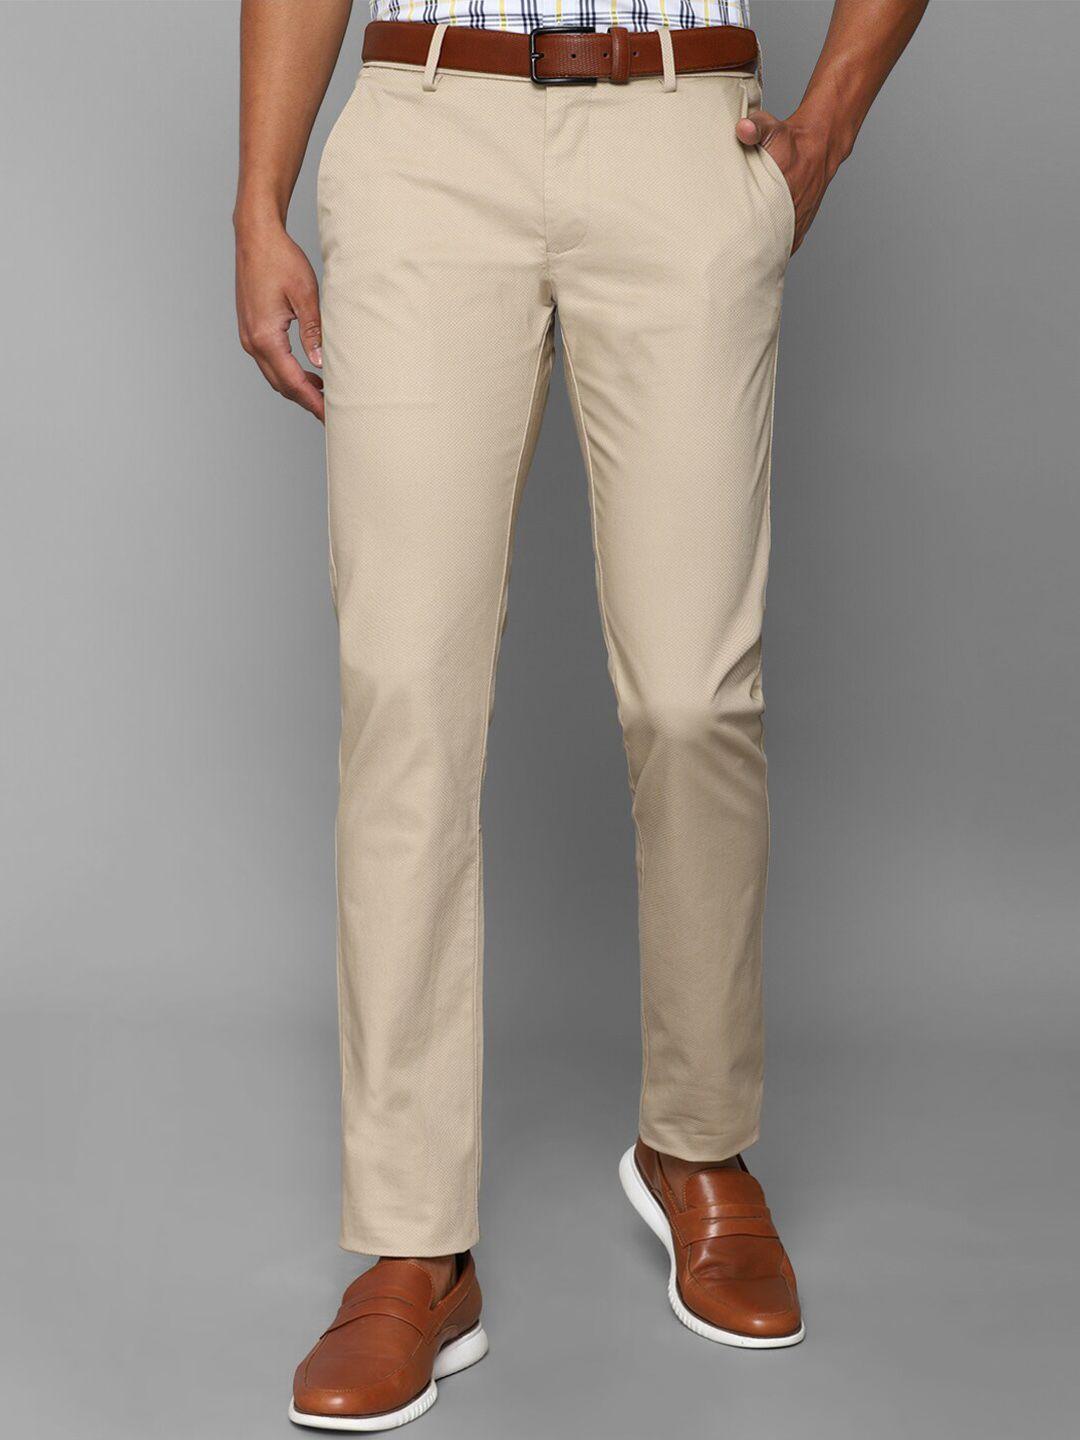 allen-solly-men-beige-slim-fit-solid-cotton-trouser